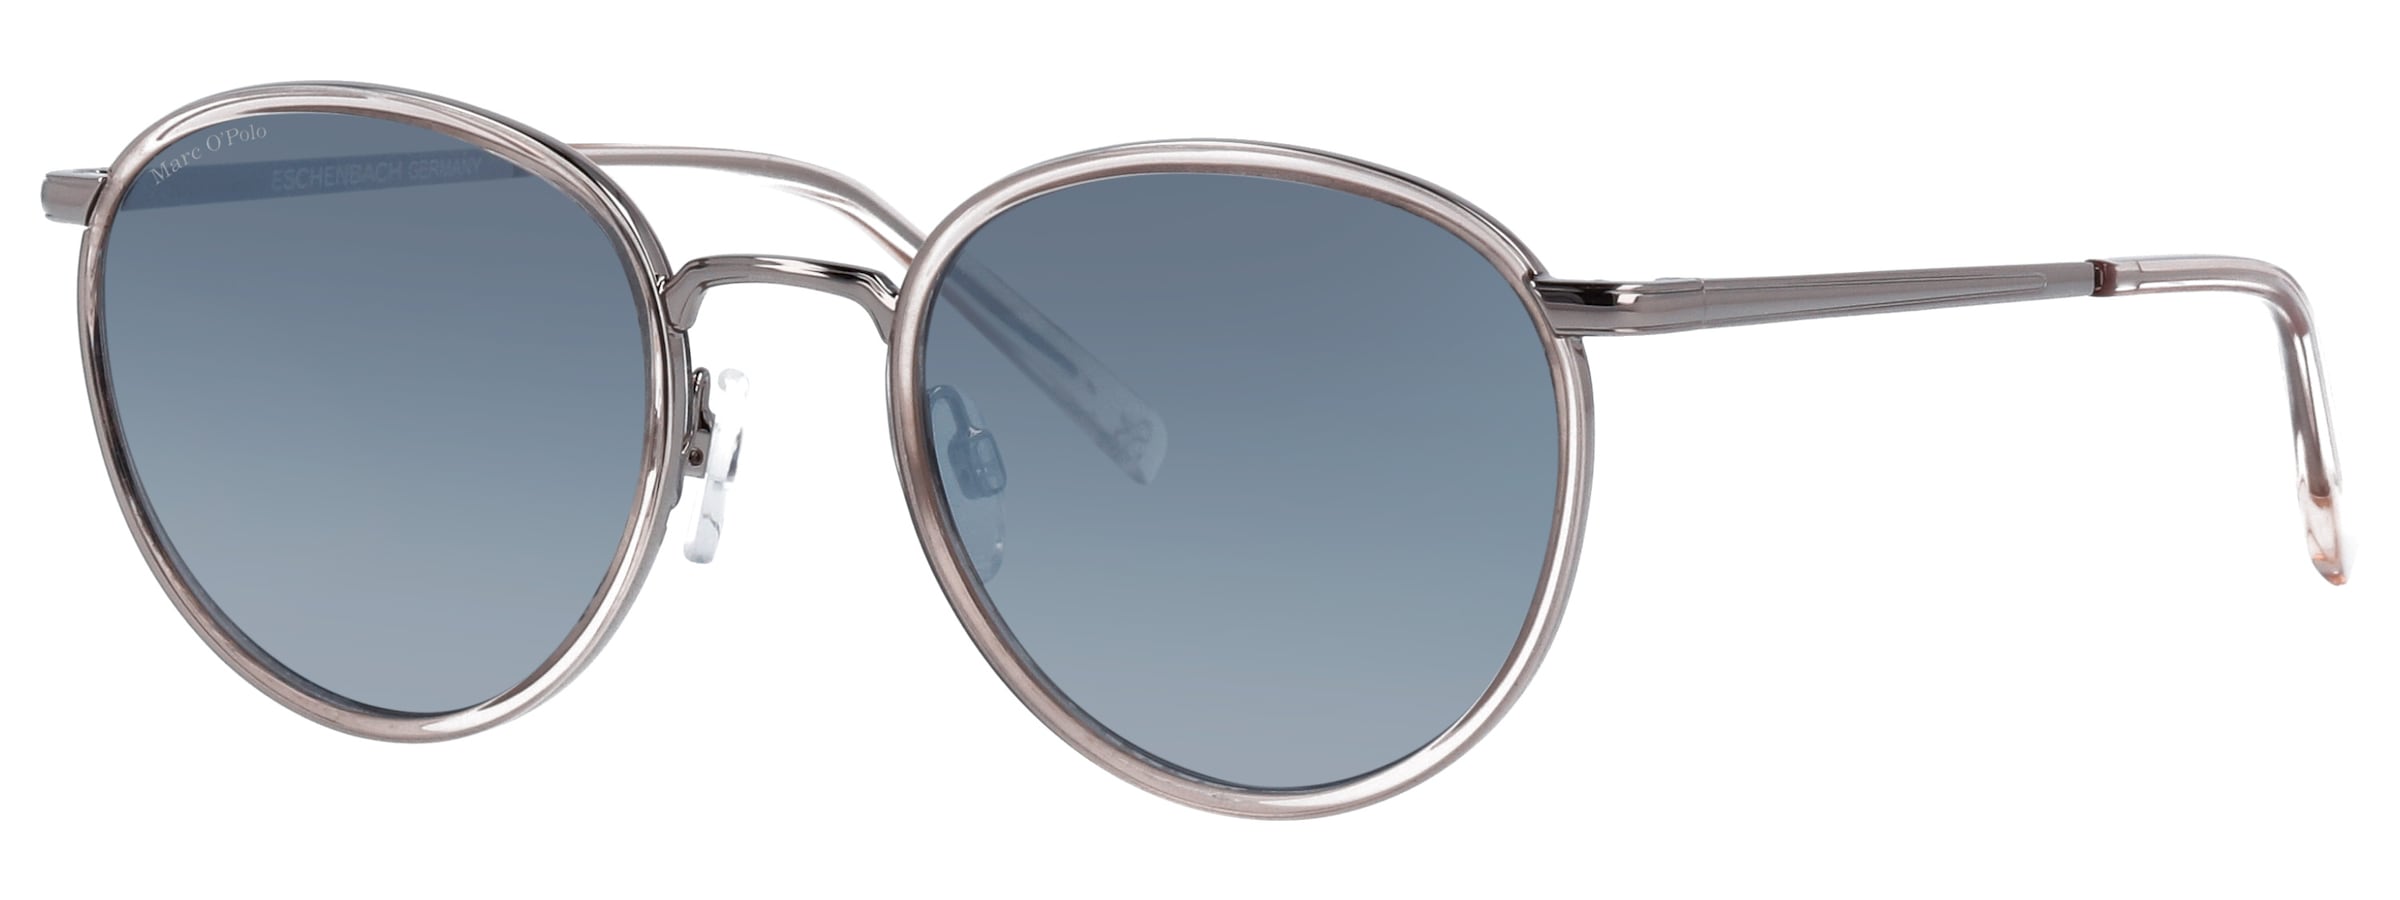 Sonnenbrille »Modell 505105«, Panto-Form